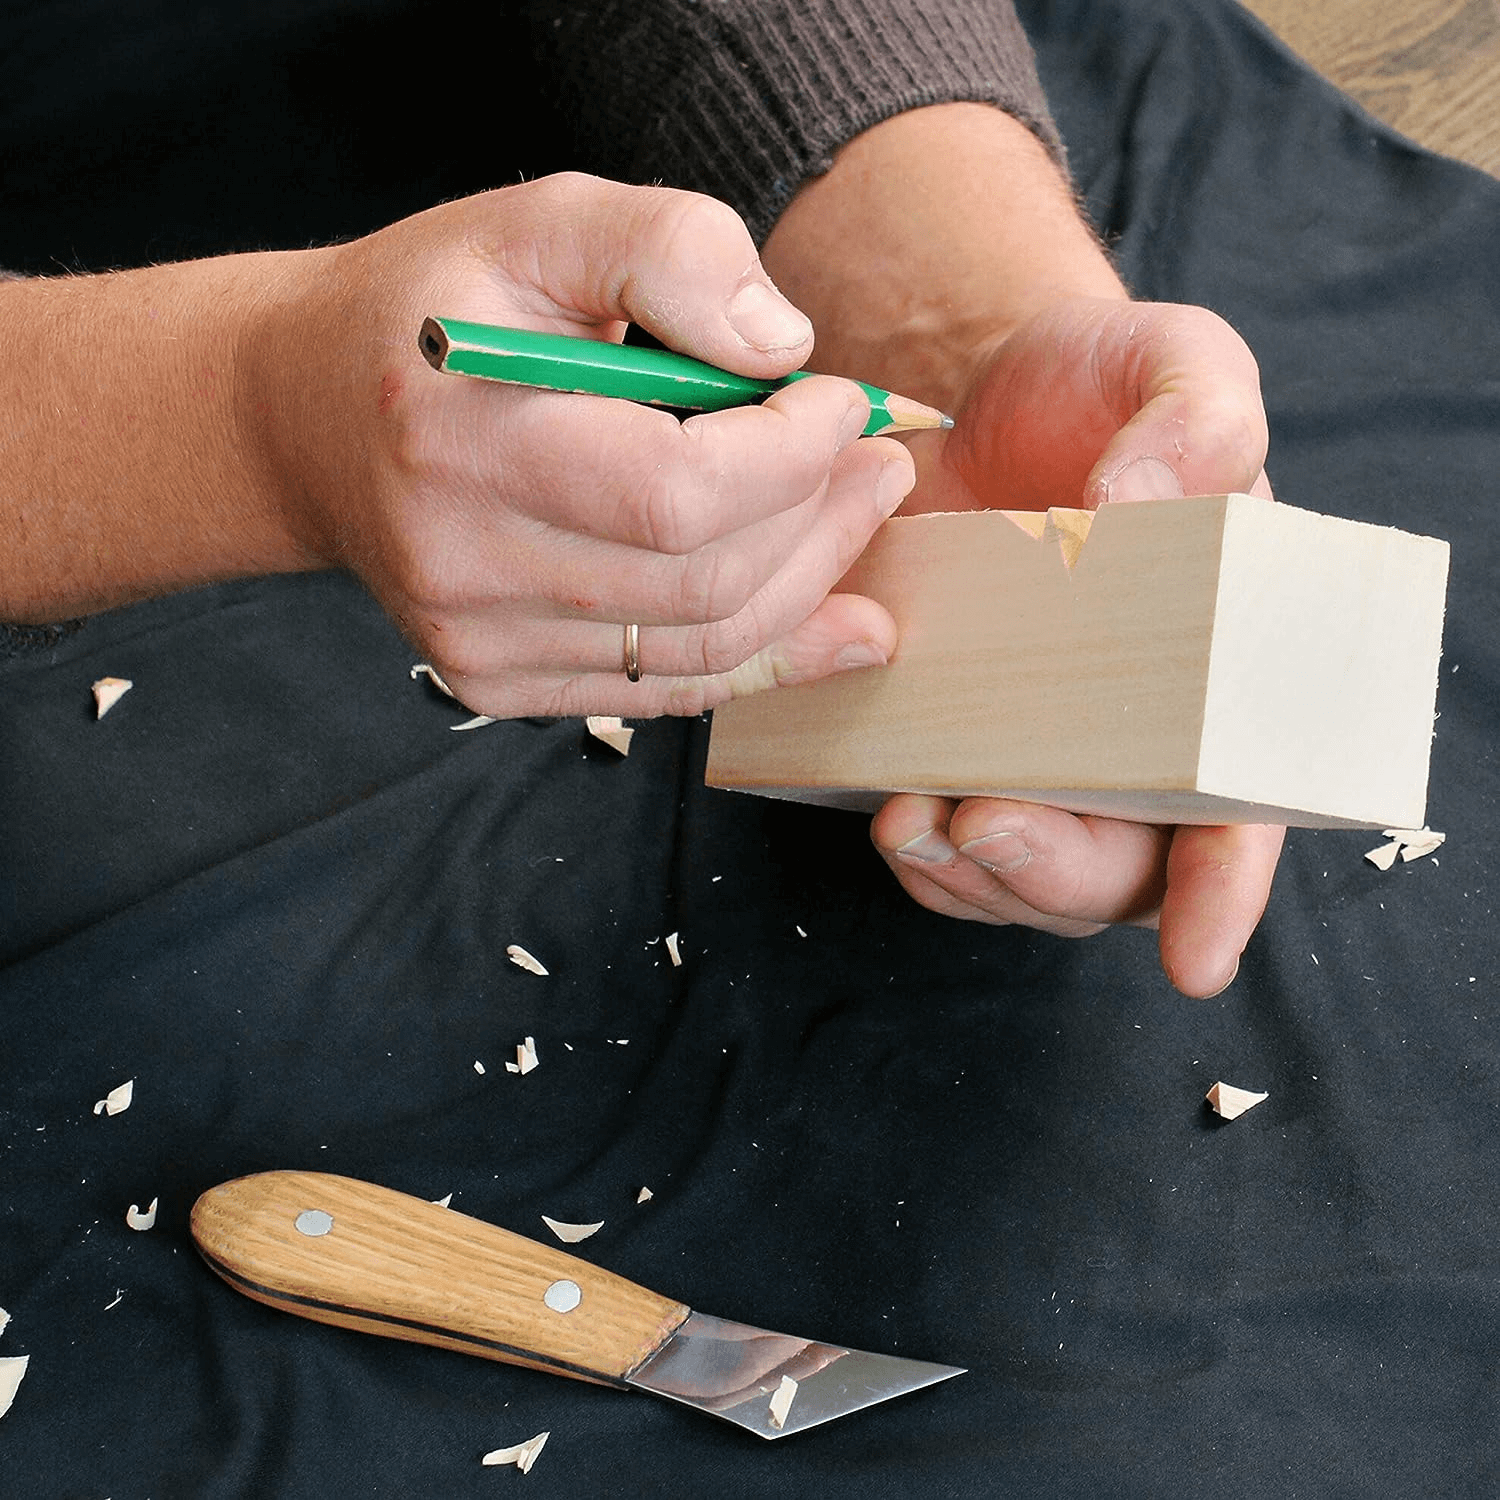 Wood carving axe, hand carpentry tool STRYI, Profi – Wood carving tools  STRYI